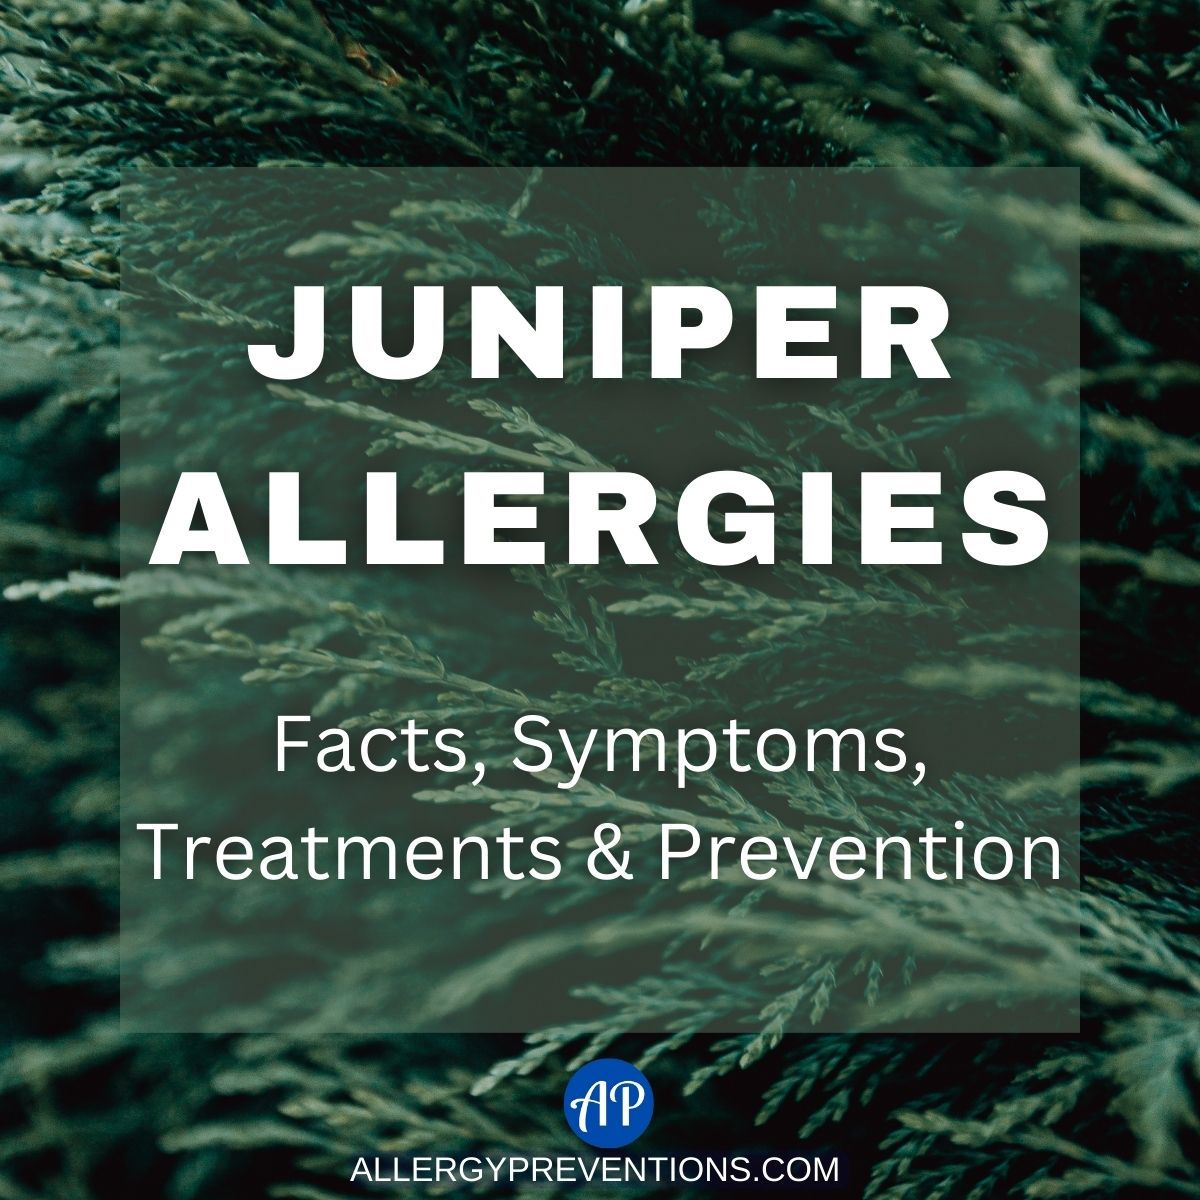 Juniper Allergies: Facts, Symptoms, Treatments & Prevention